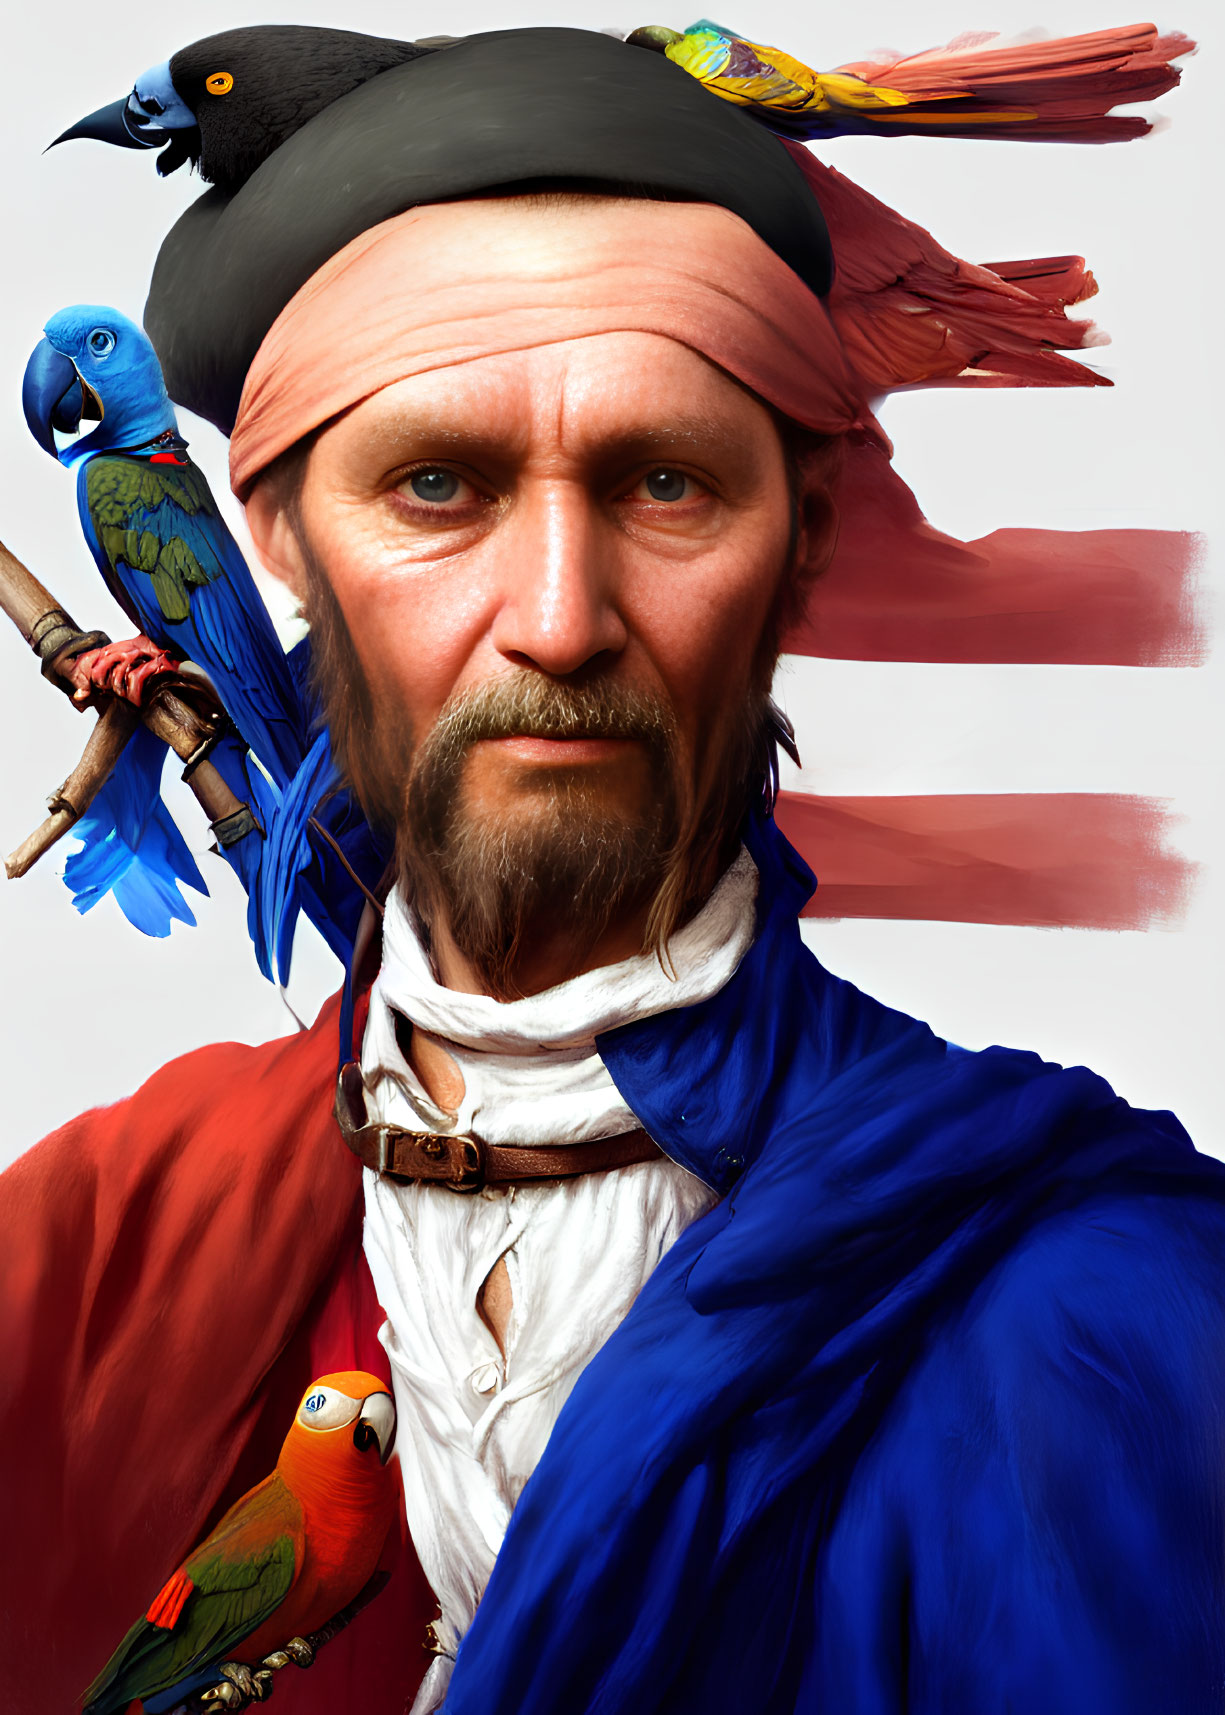 Digital art portrait of pirate with parrot, red bandana, blue coat, intense gaze